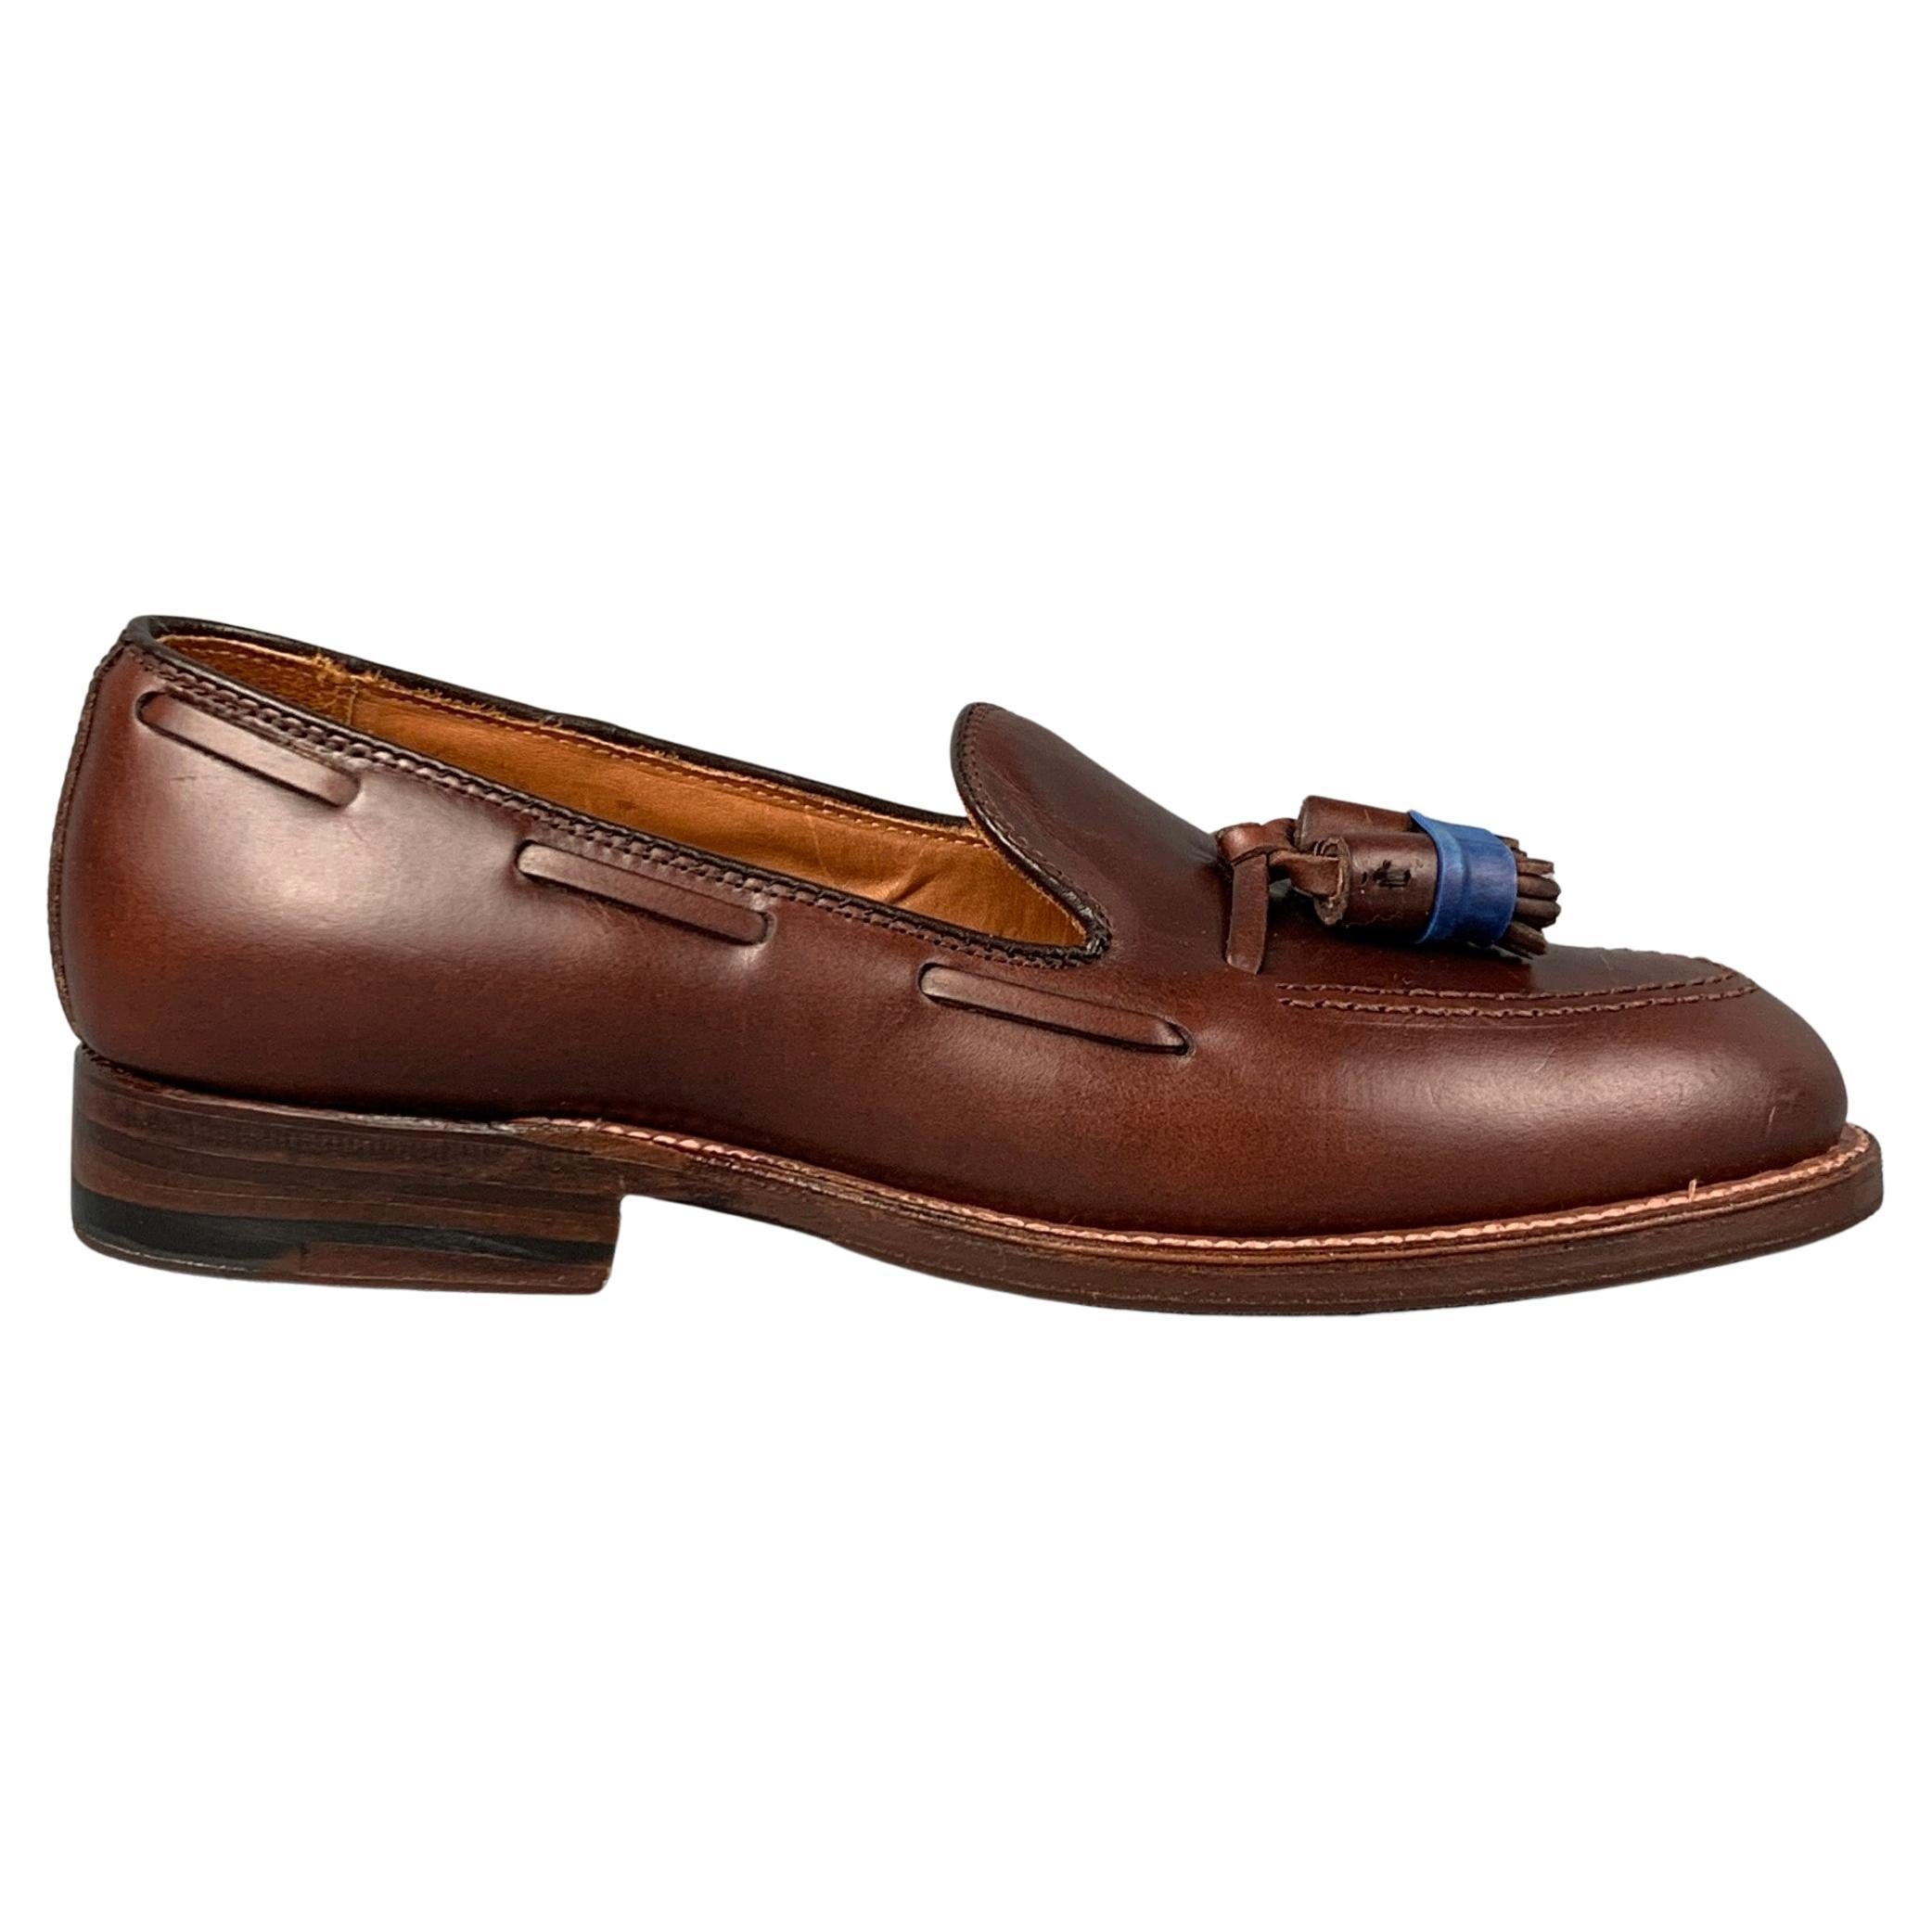 ALDEN Bootmaker Edition Size 7 Brown Leather Tassels Loafers